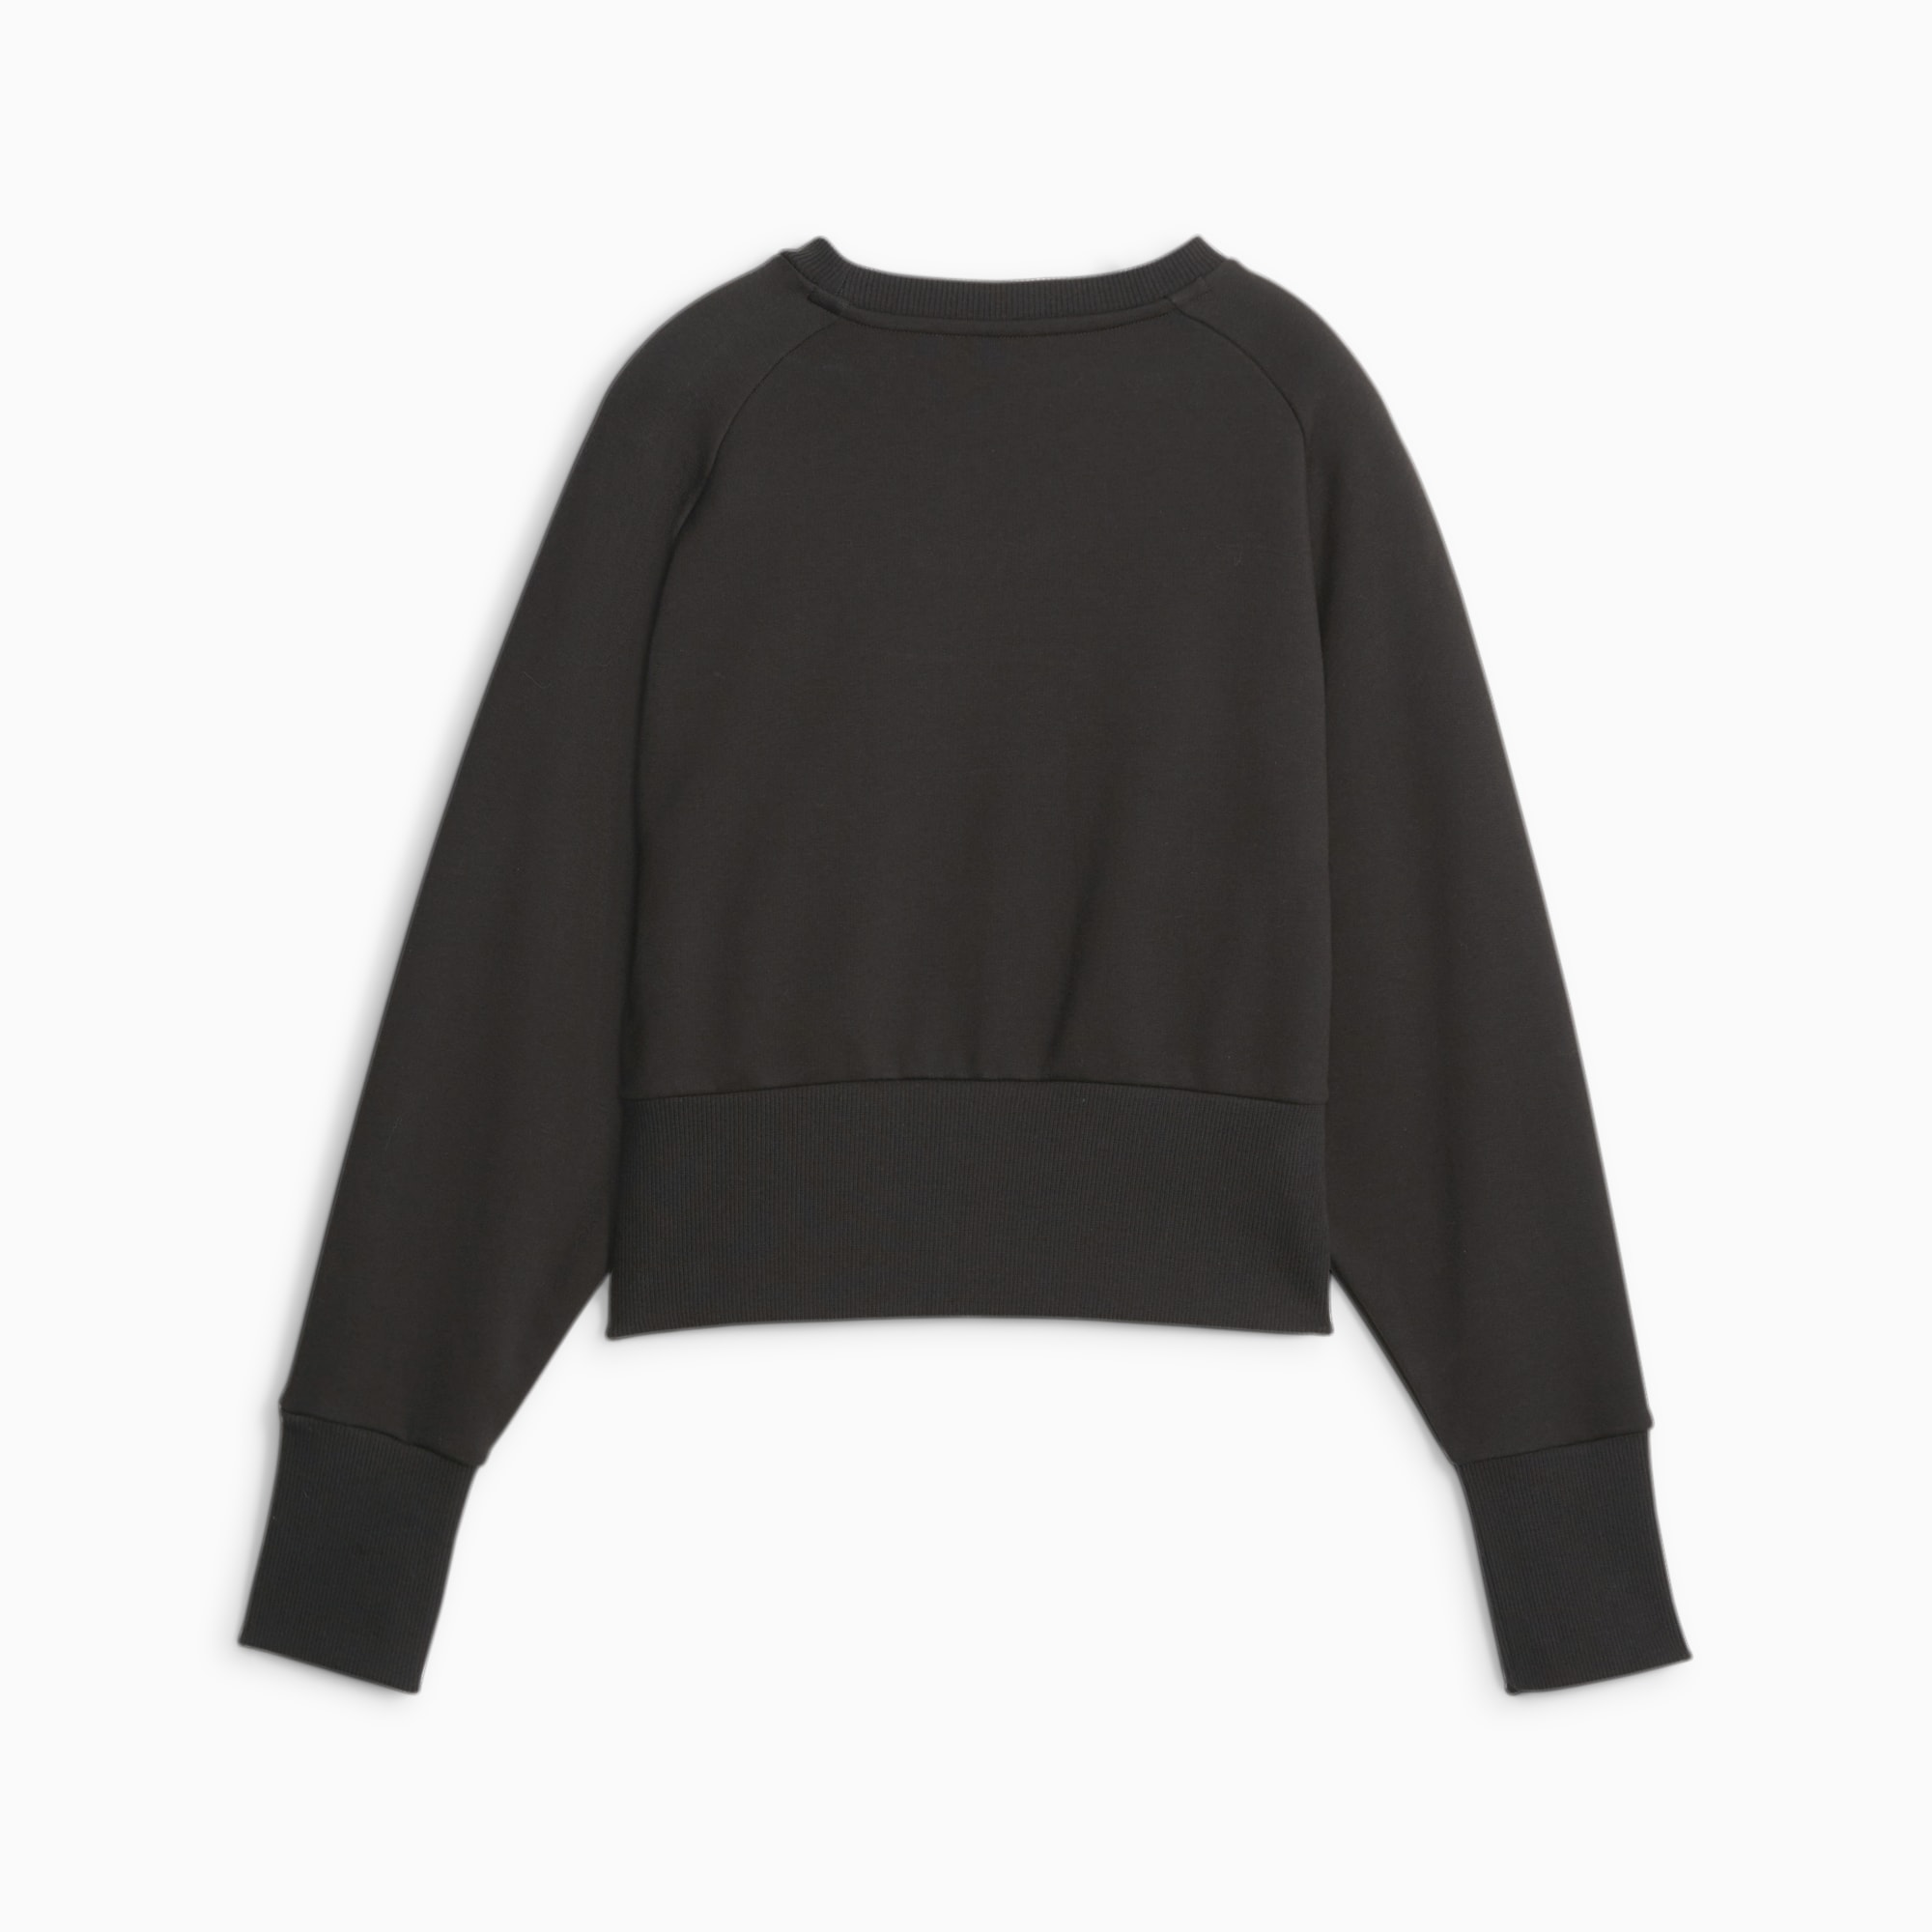 PUMA Classics Women's Sweatshirt, Black, Size XS, Clothing